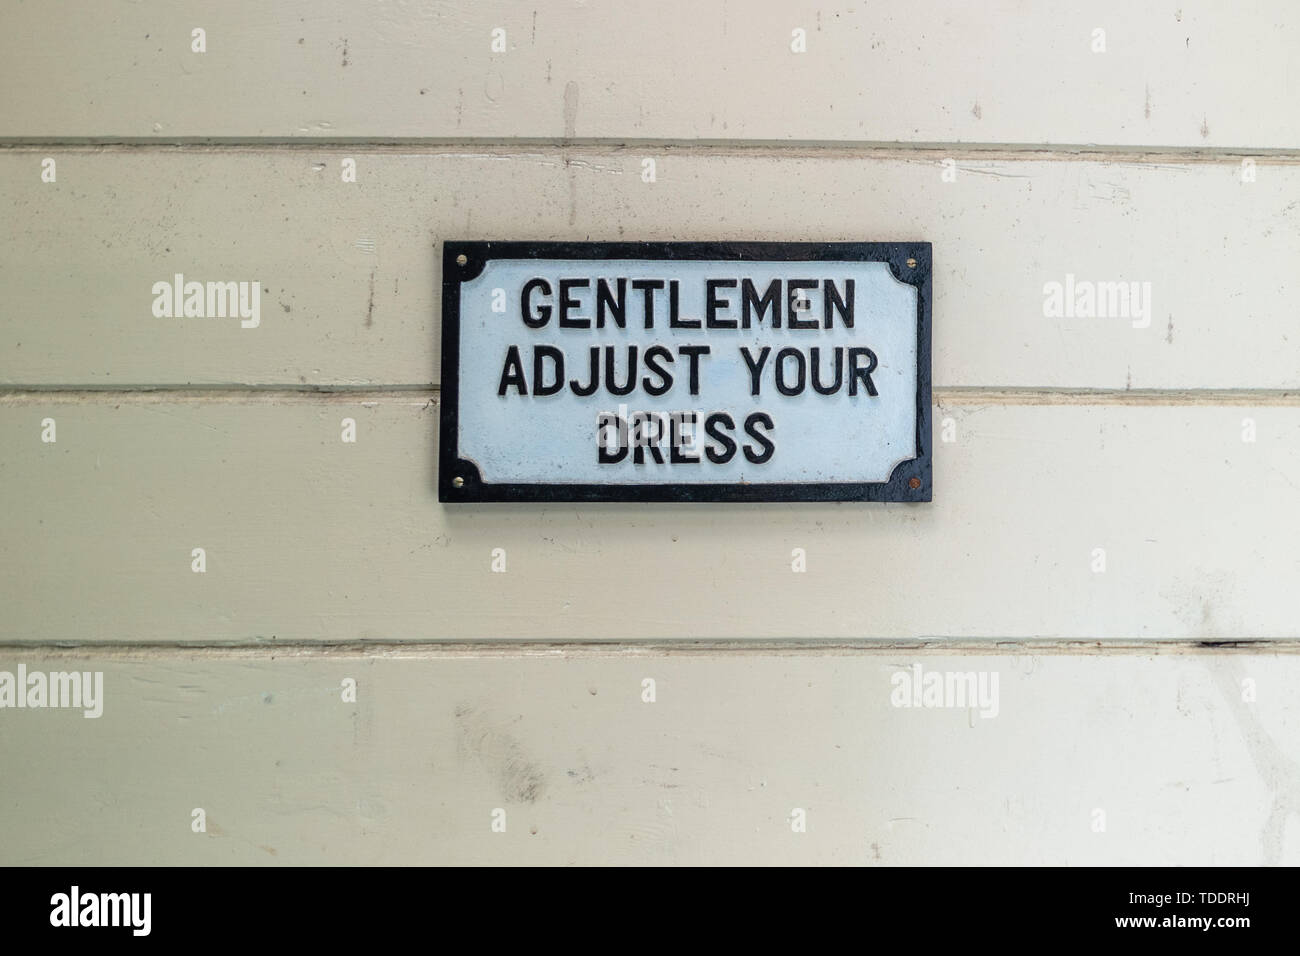 Genteman adjust your dress sign, taken outside Gents loo at Eridge station Stock Photo